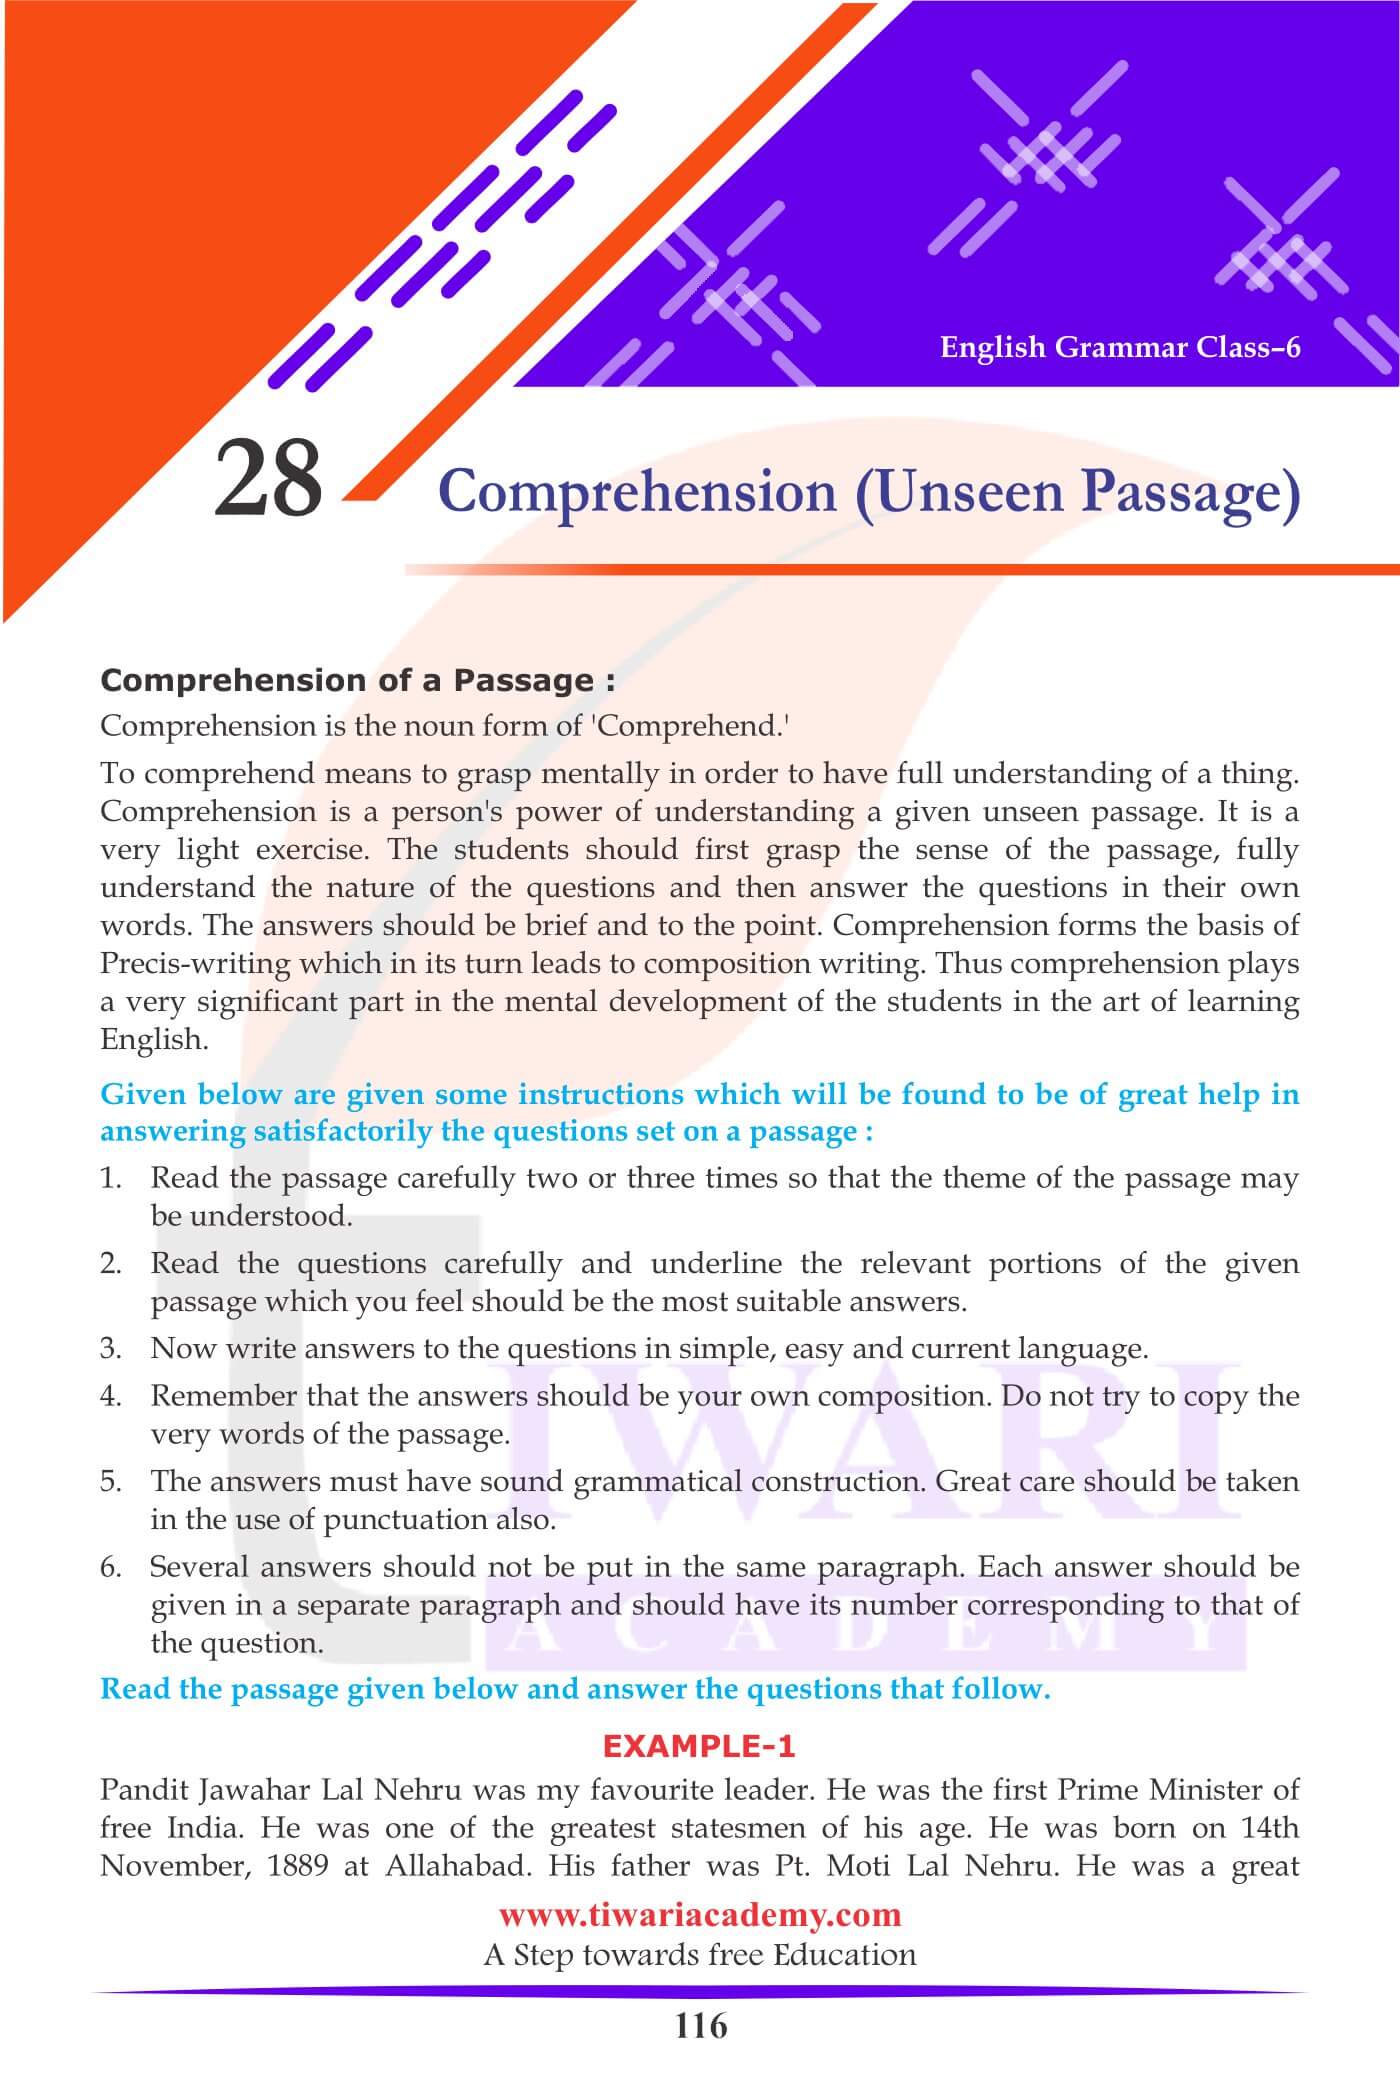 Class 6 English Grammar Chapter 28 Comprehension